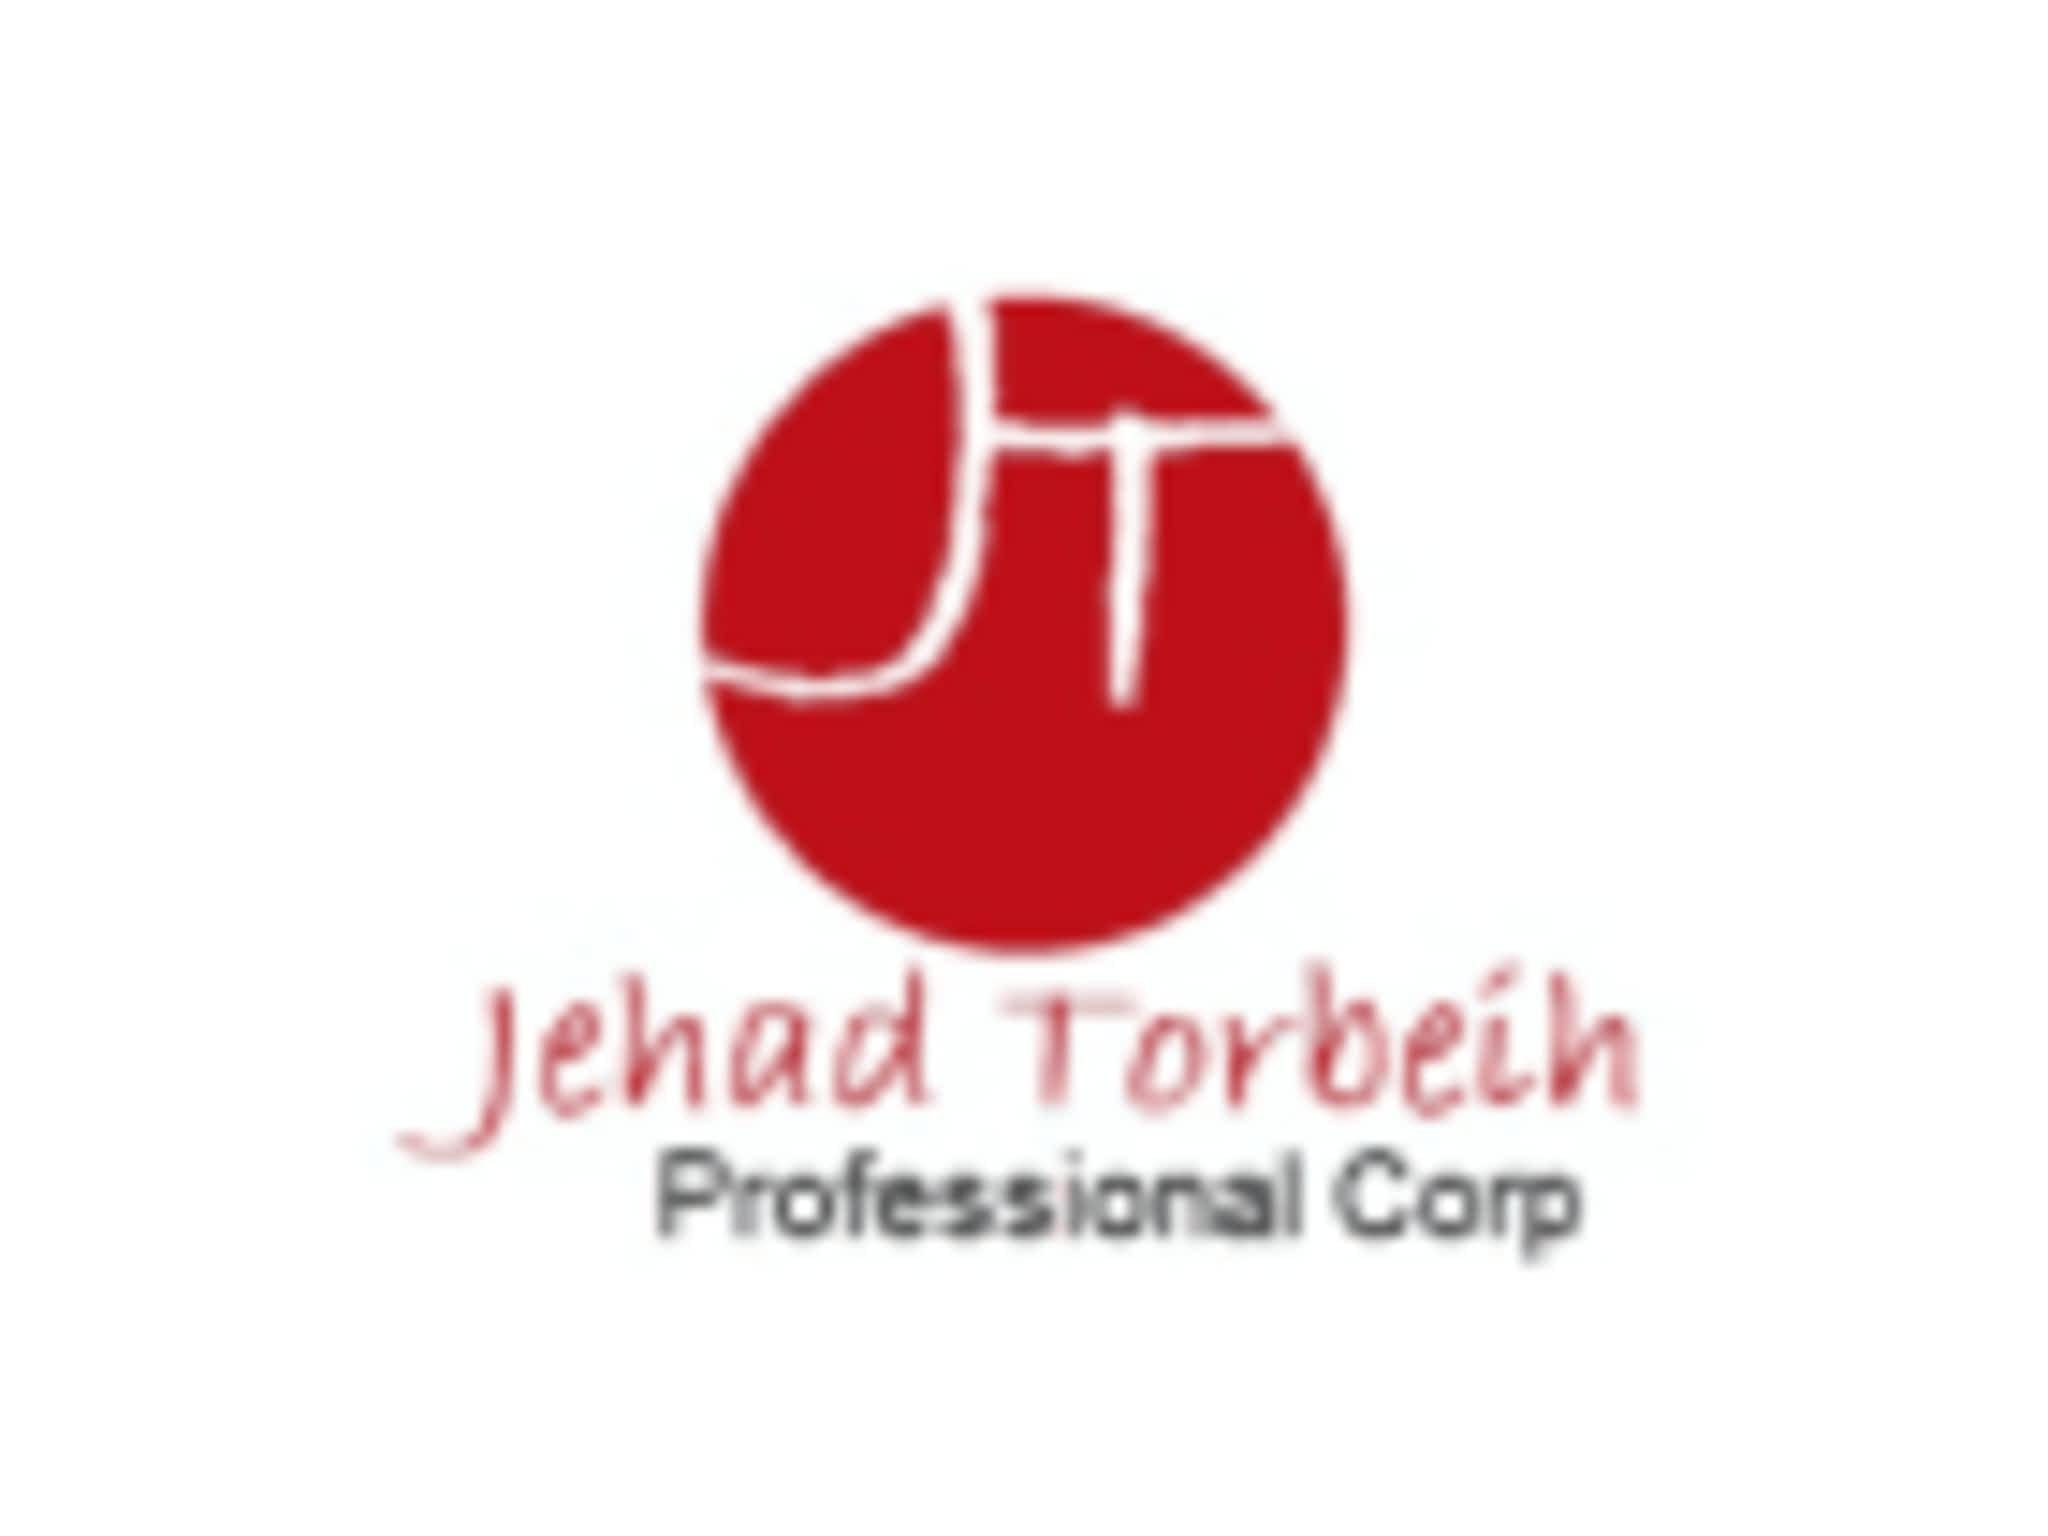 photo Jehad Torbeih Professional Corp